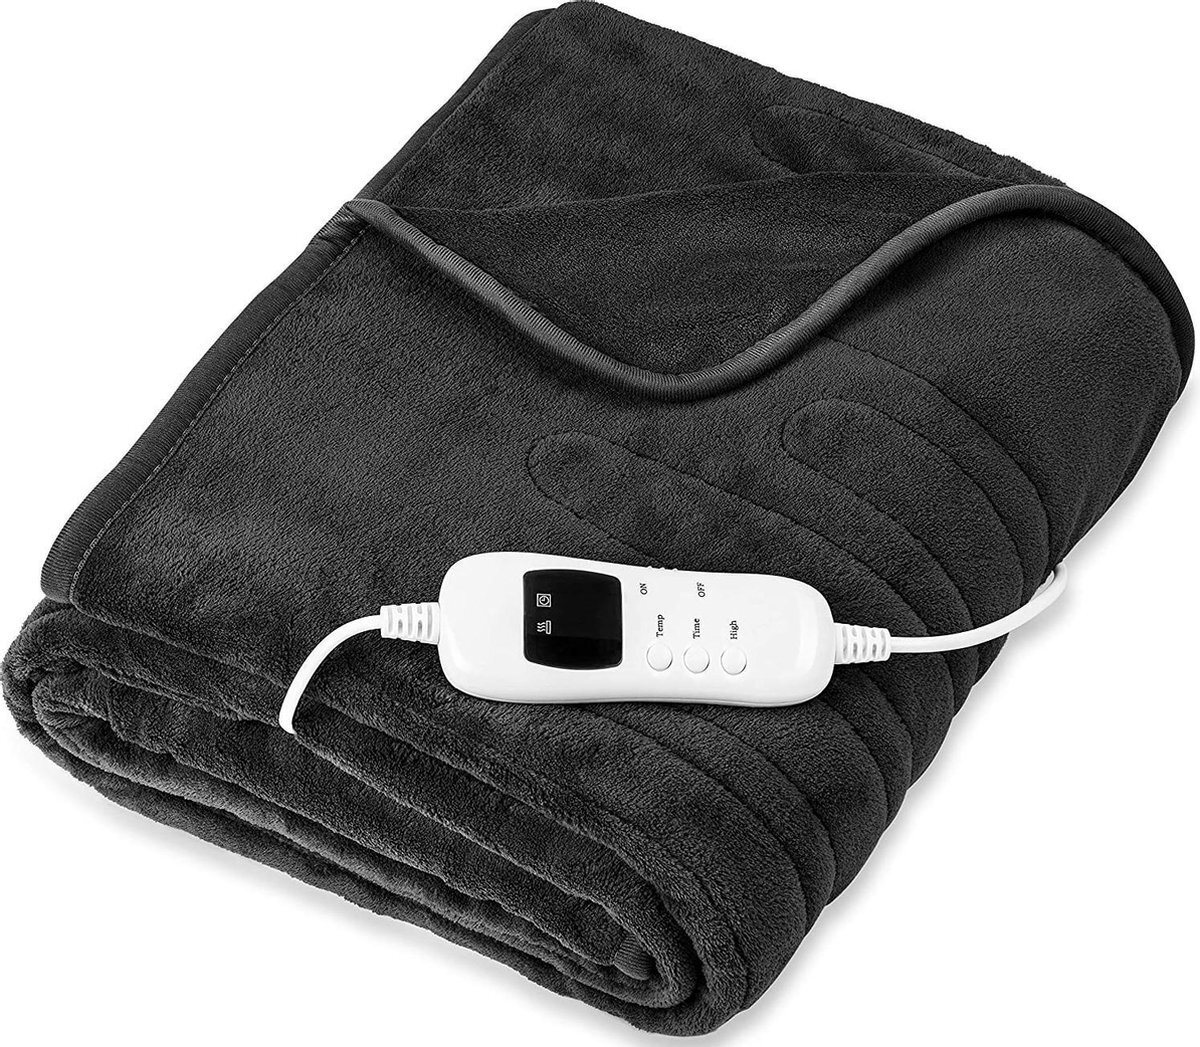 Sinnlein Sinnlein® - Elektrische deken antraciet - fleece deken - warmte deken elektrisch - verwarmde deken XXL - verwarmingsdeken - 160 x 120 cm - automatisch uitschakelen - knuffeldeken - timerfunctie - 9 temperatuurniveaus wasbaar tot 40 °C